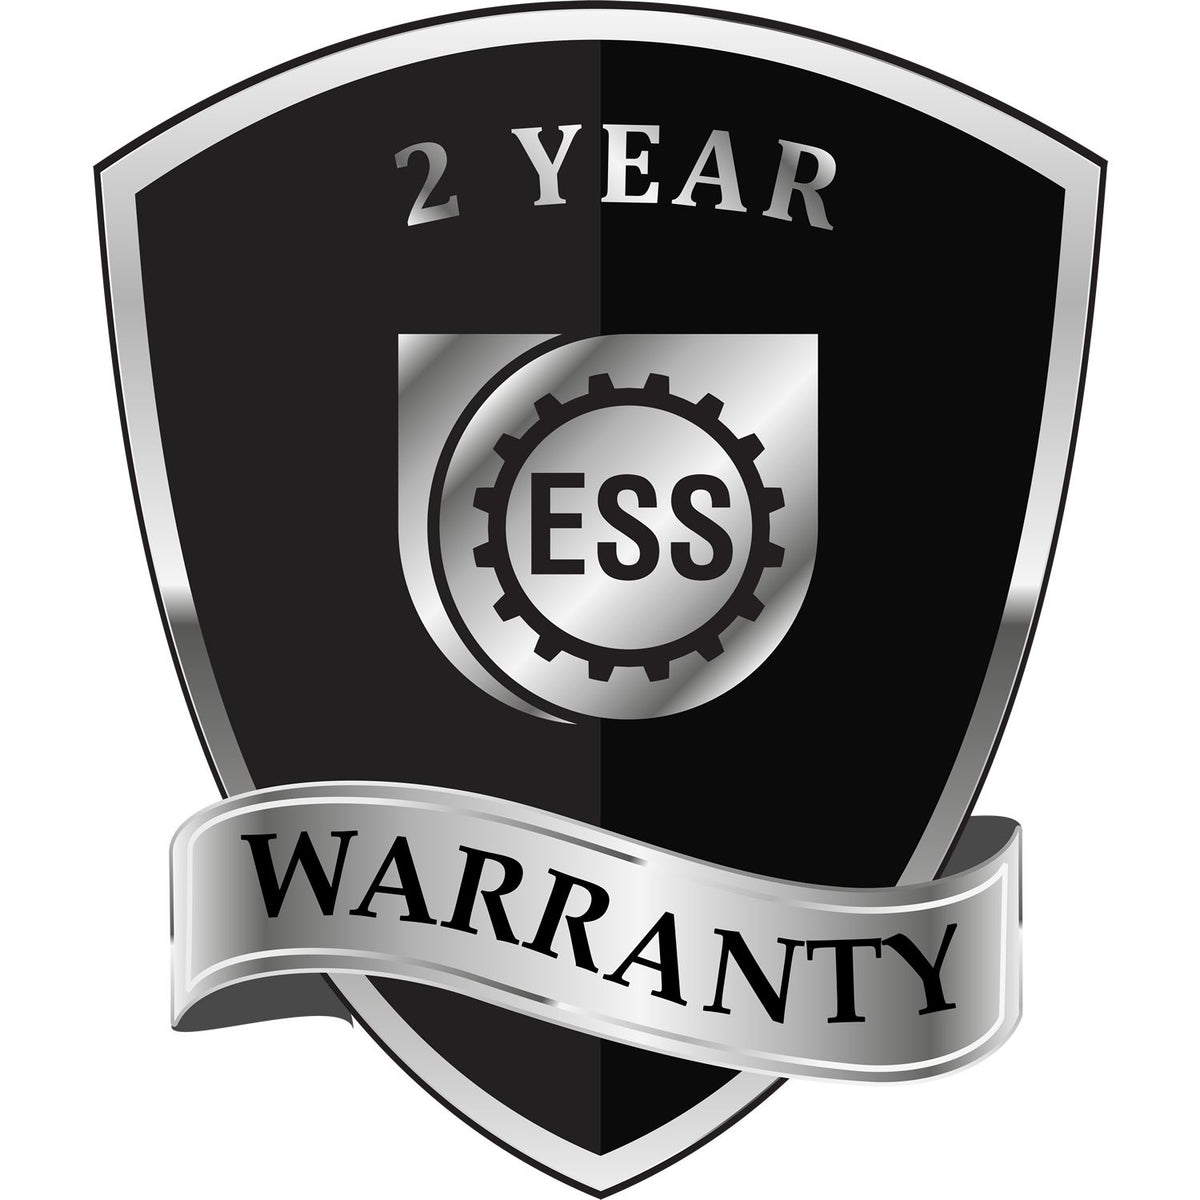 A black and silver badge or emblem showing warranty information for the Handheld West Virginia Professional Geologist Embosser